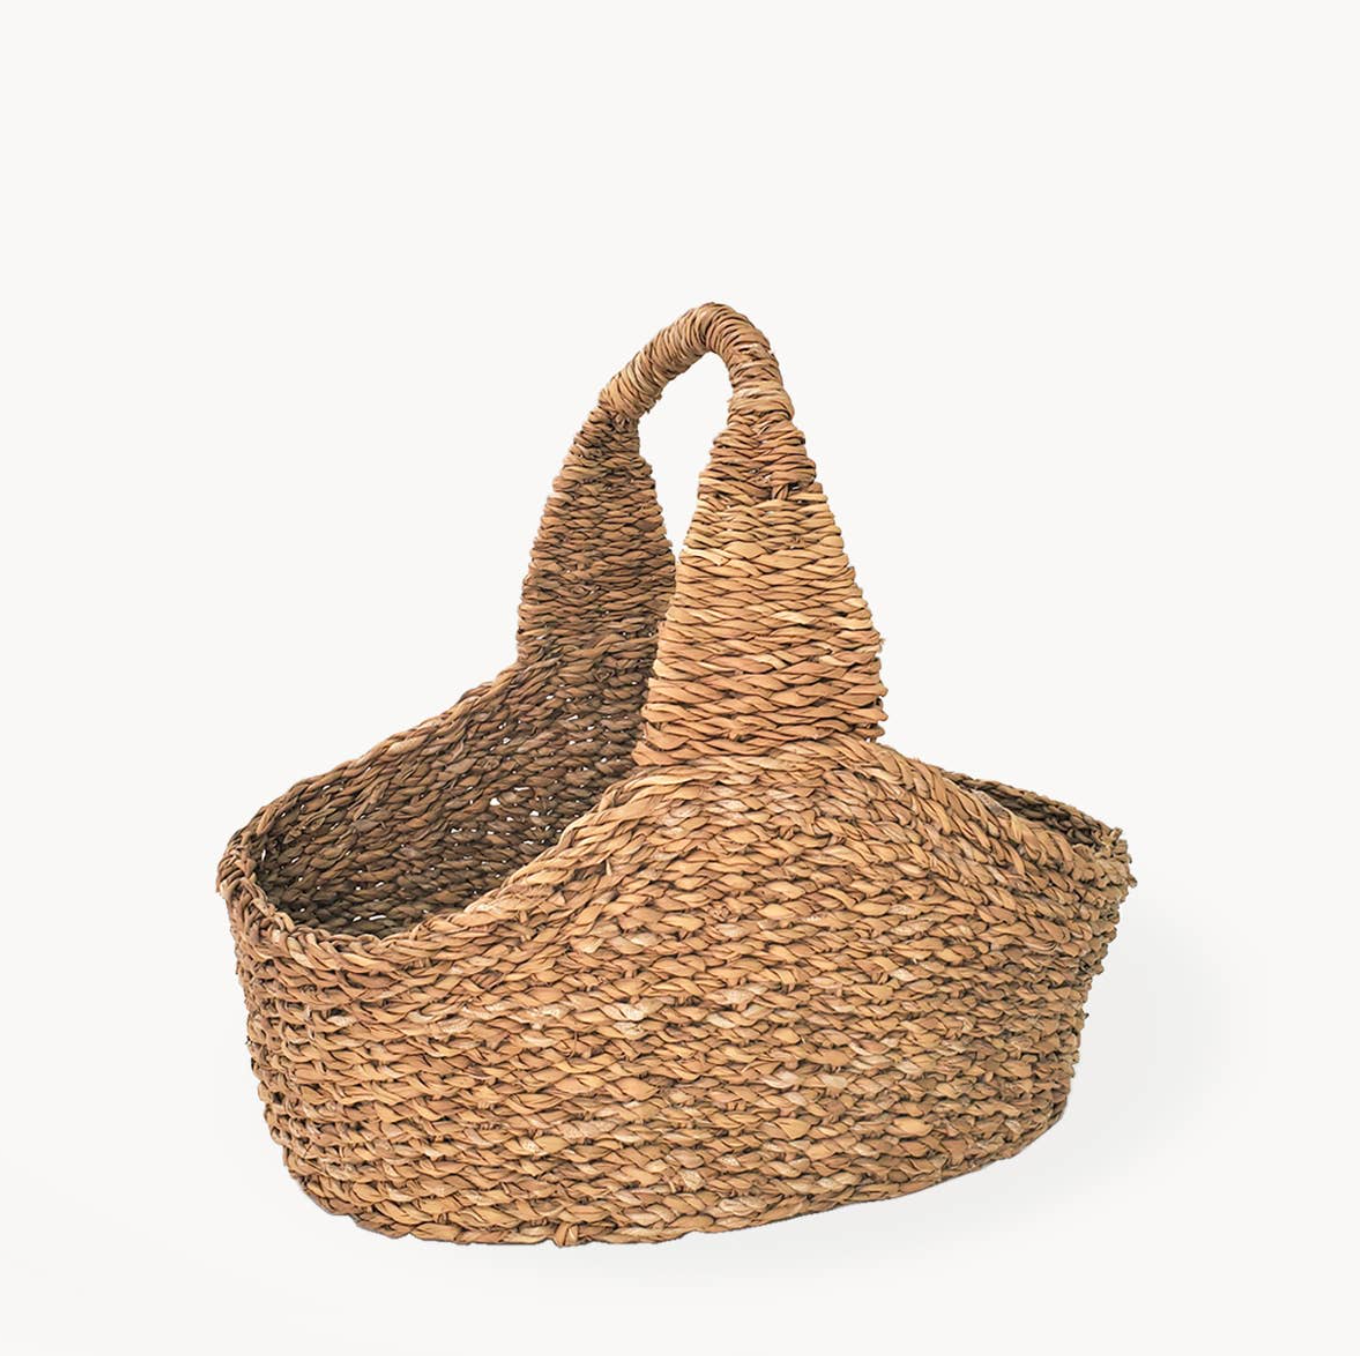 Seagrass Picnic Basket